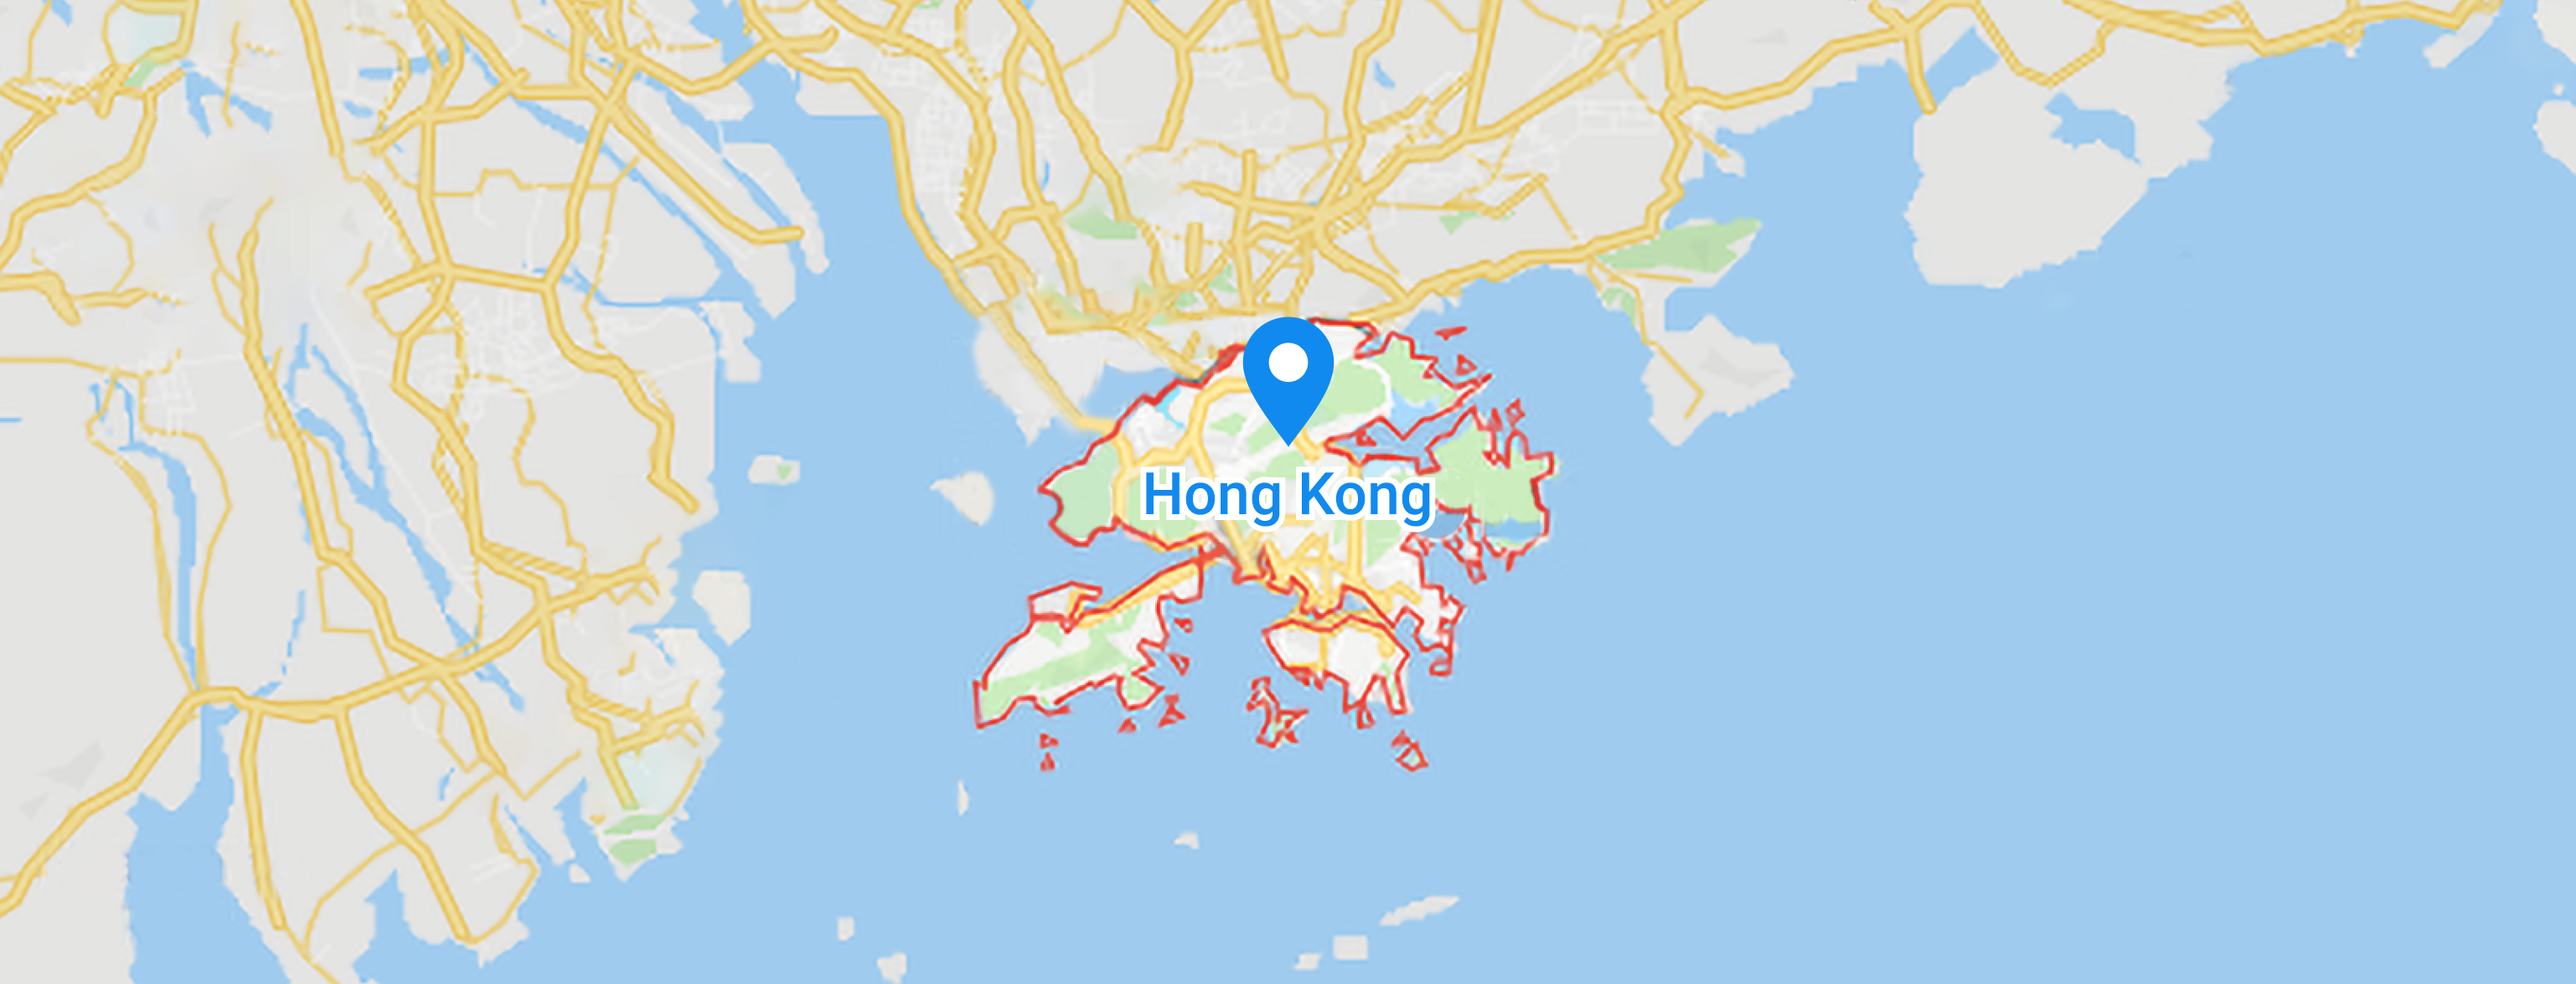 hongkong map